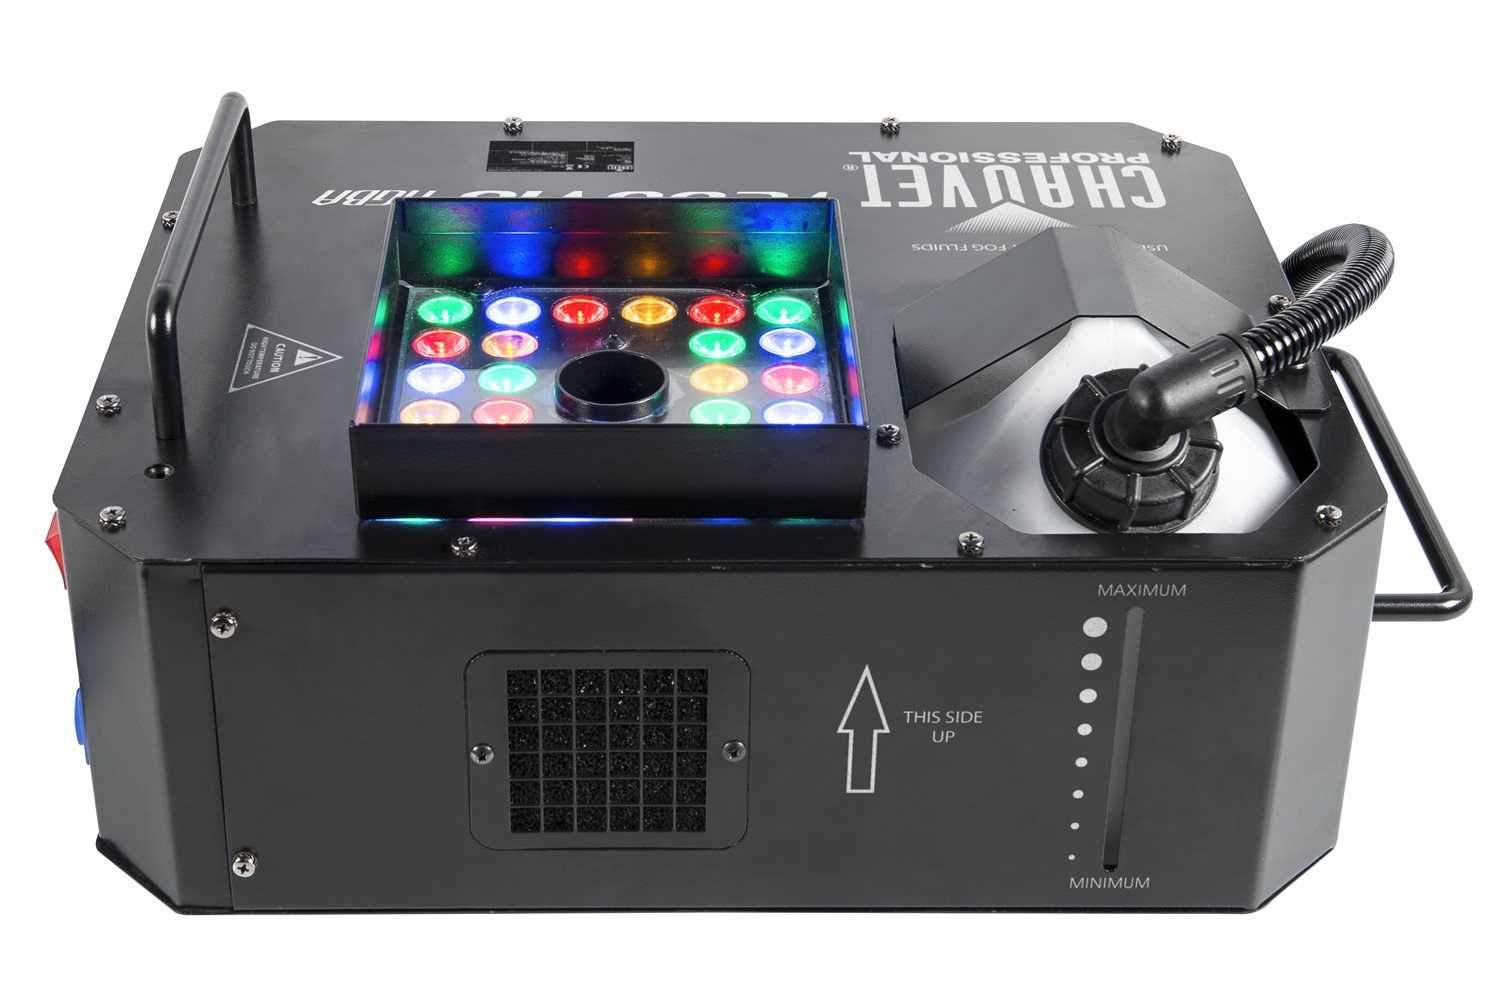 Chauvet Vesuvio RGBA DMX LED Light & Fog Machine - PSSL ProSound and Stage Lighting